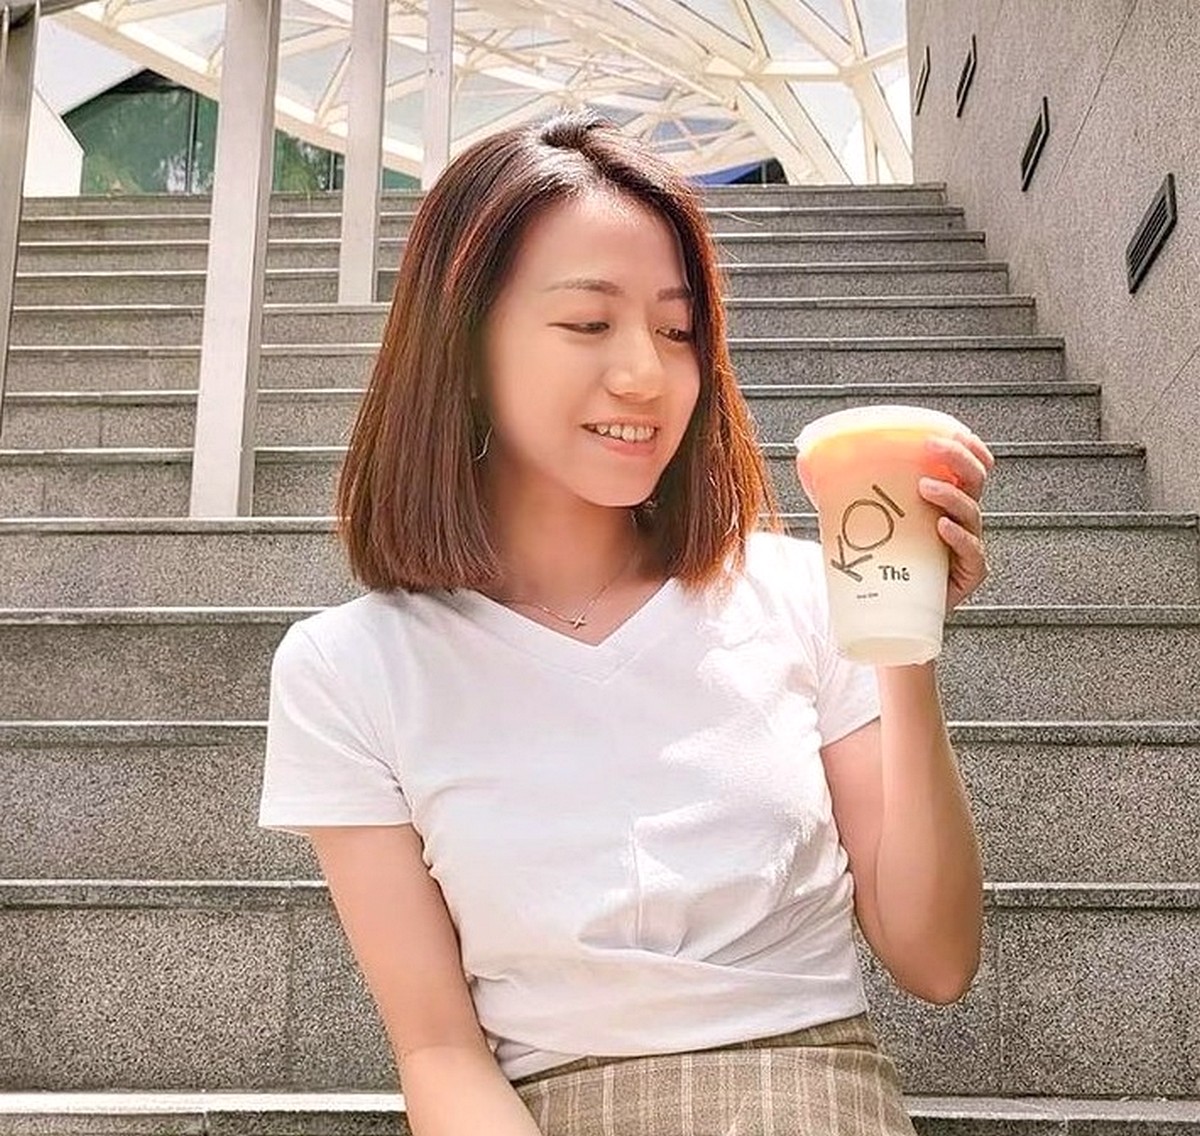 Koi-Singapore-Promotion-2021-Offers-Discounts 30 Apr 2021: KOI Thé Singapore $1 Bubble Milk Tea Promotion with Deliveroo